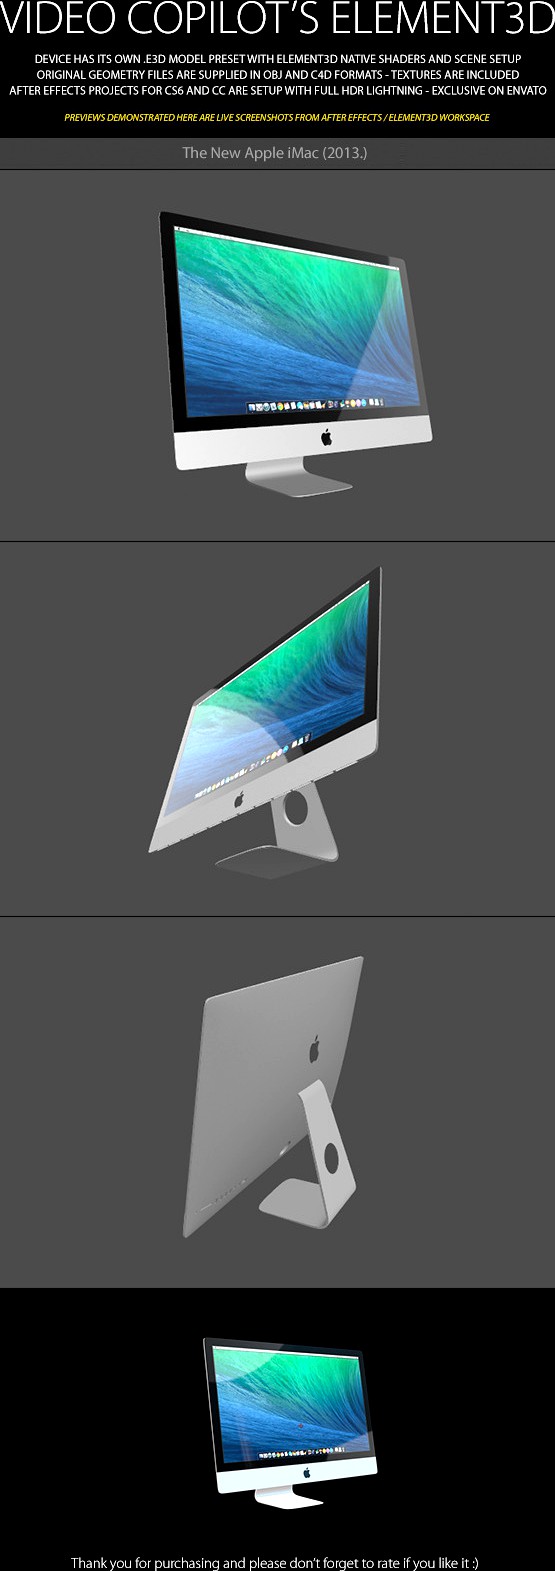 Element3D - New Apple iMac 2013